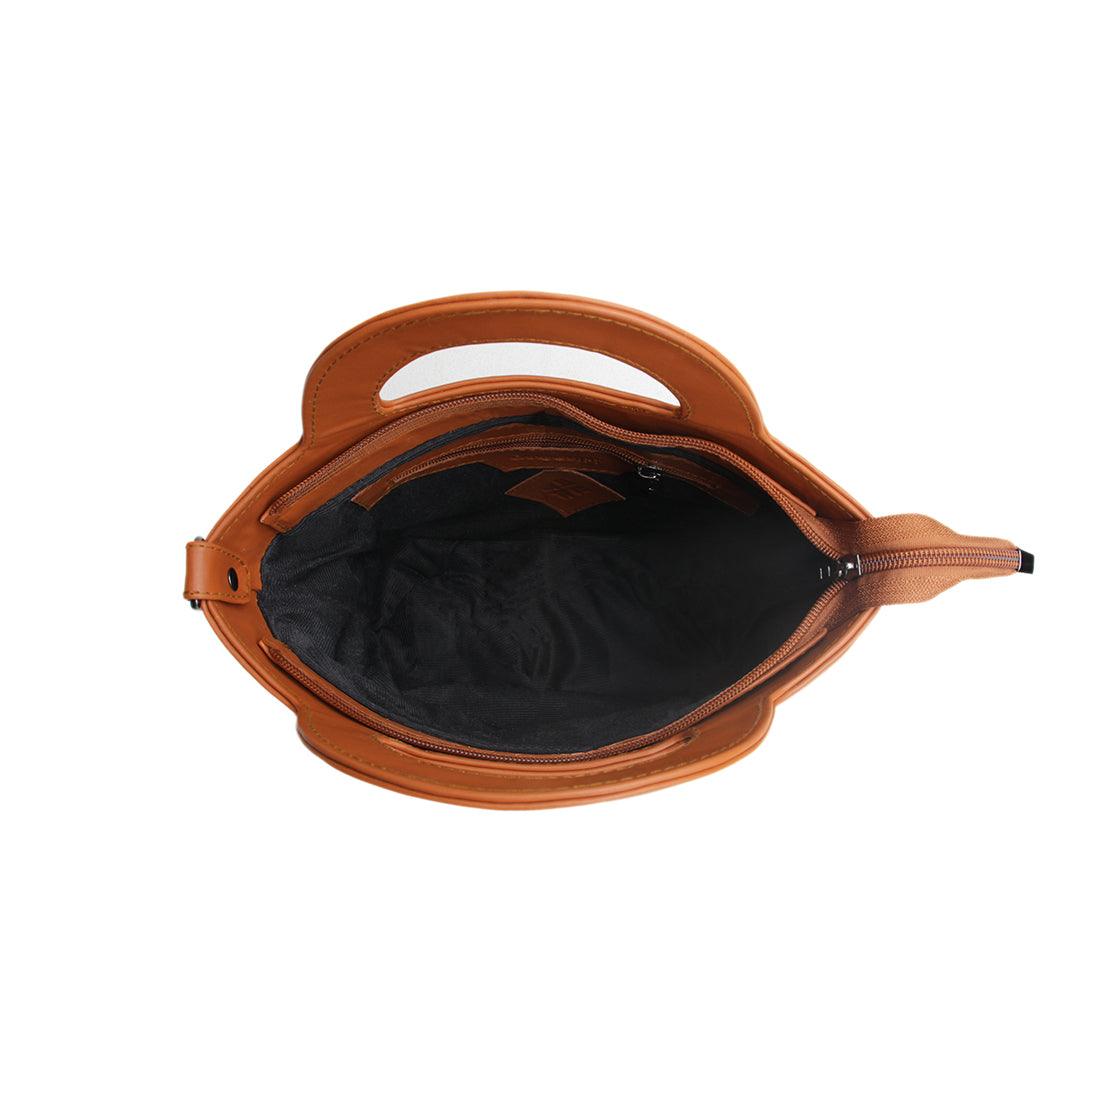 Black Top Handle Handbag Bird - CANVAEGYPT